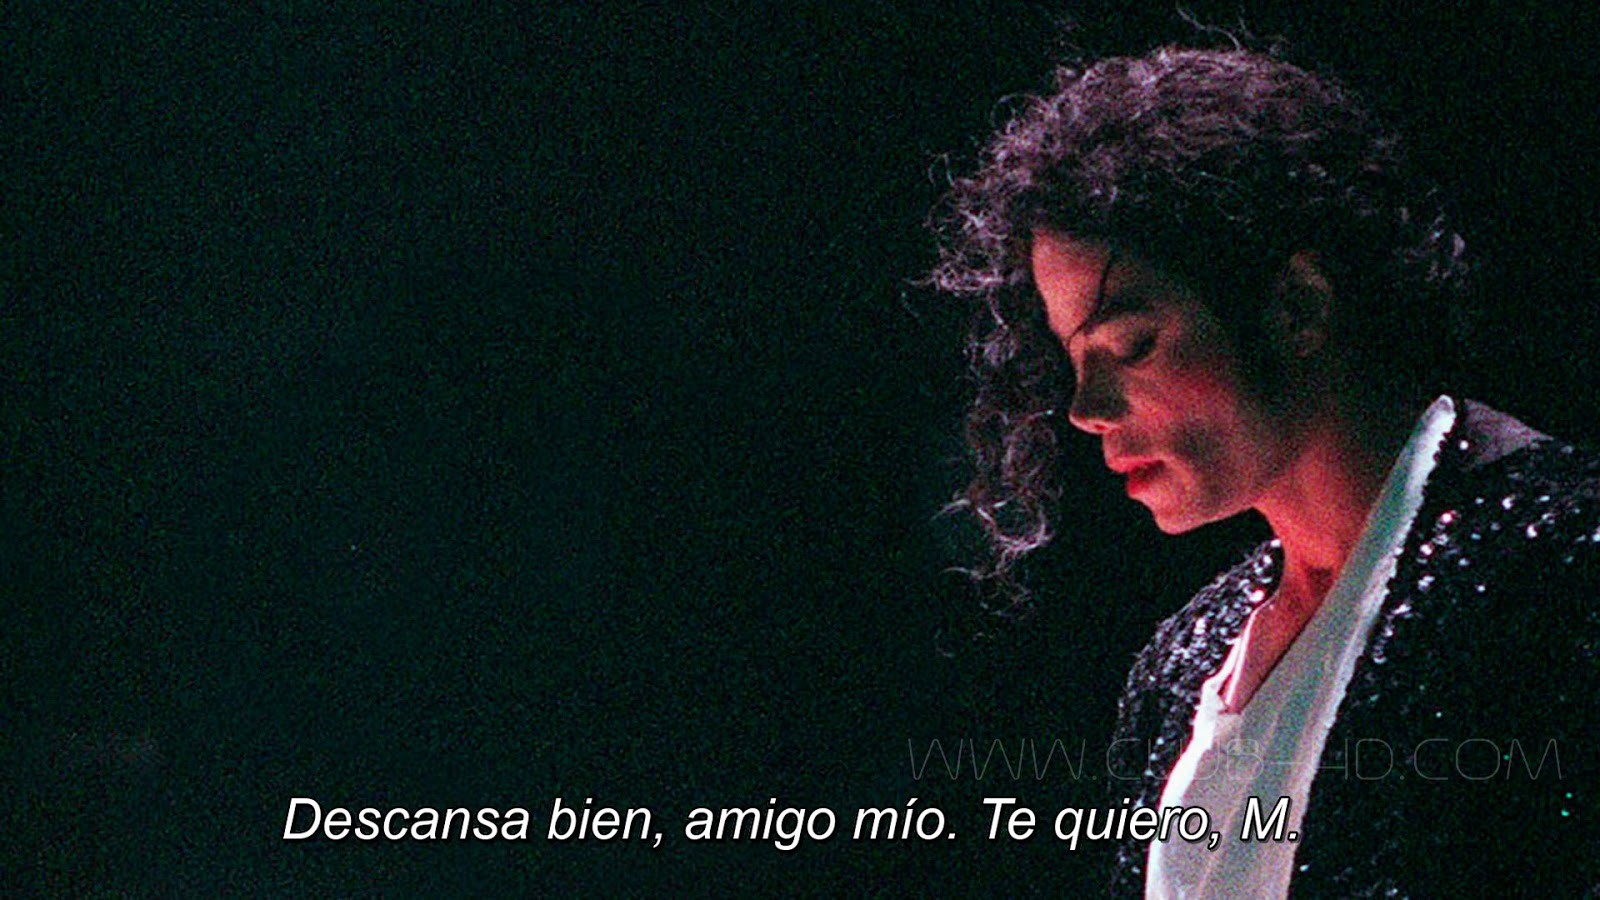 Michael-Jackson-The-Life-of-an-Icon-CAPTURA-15.jpg